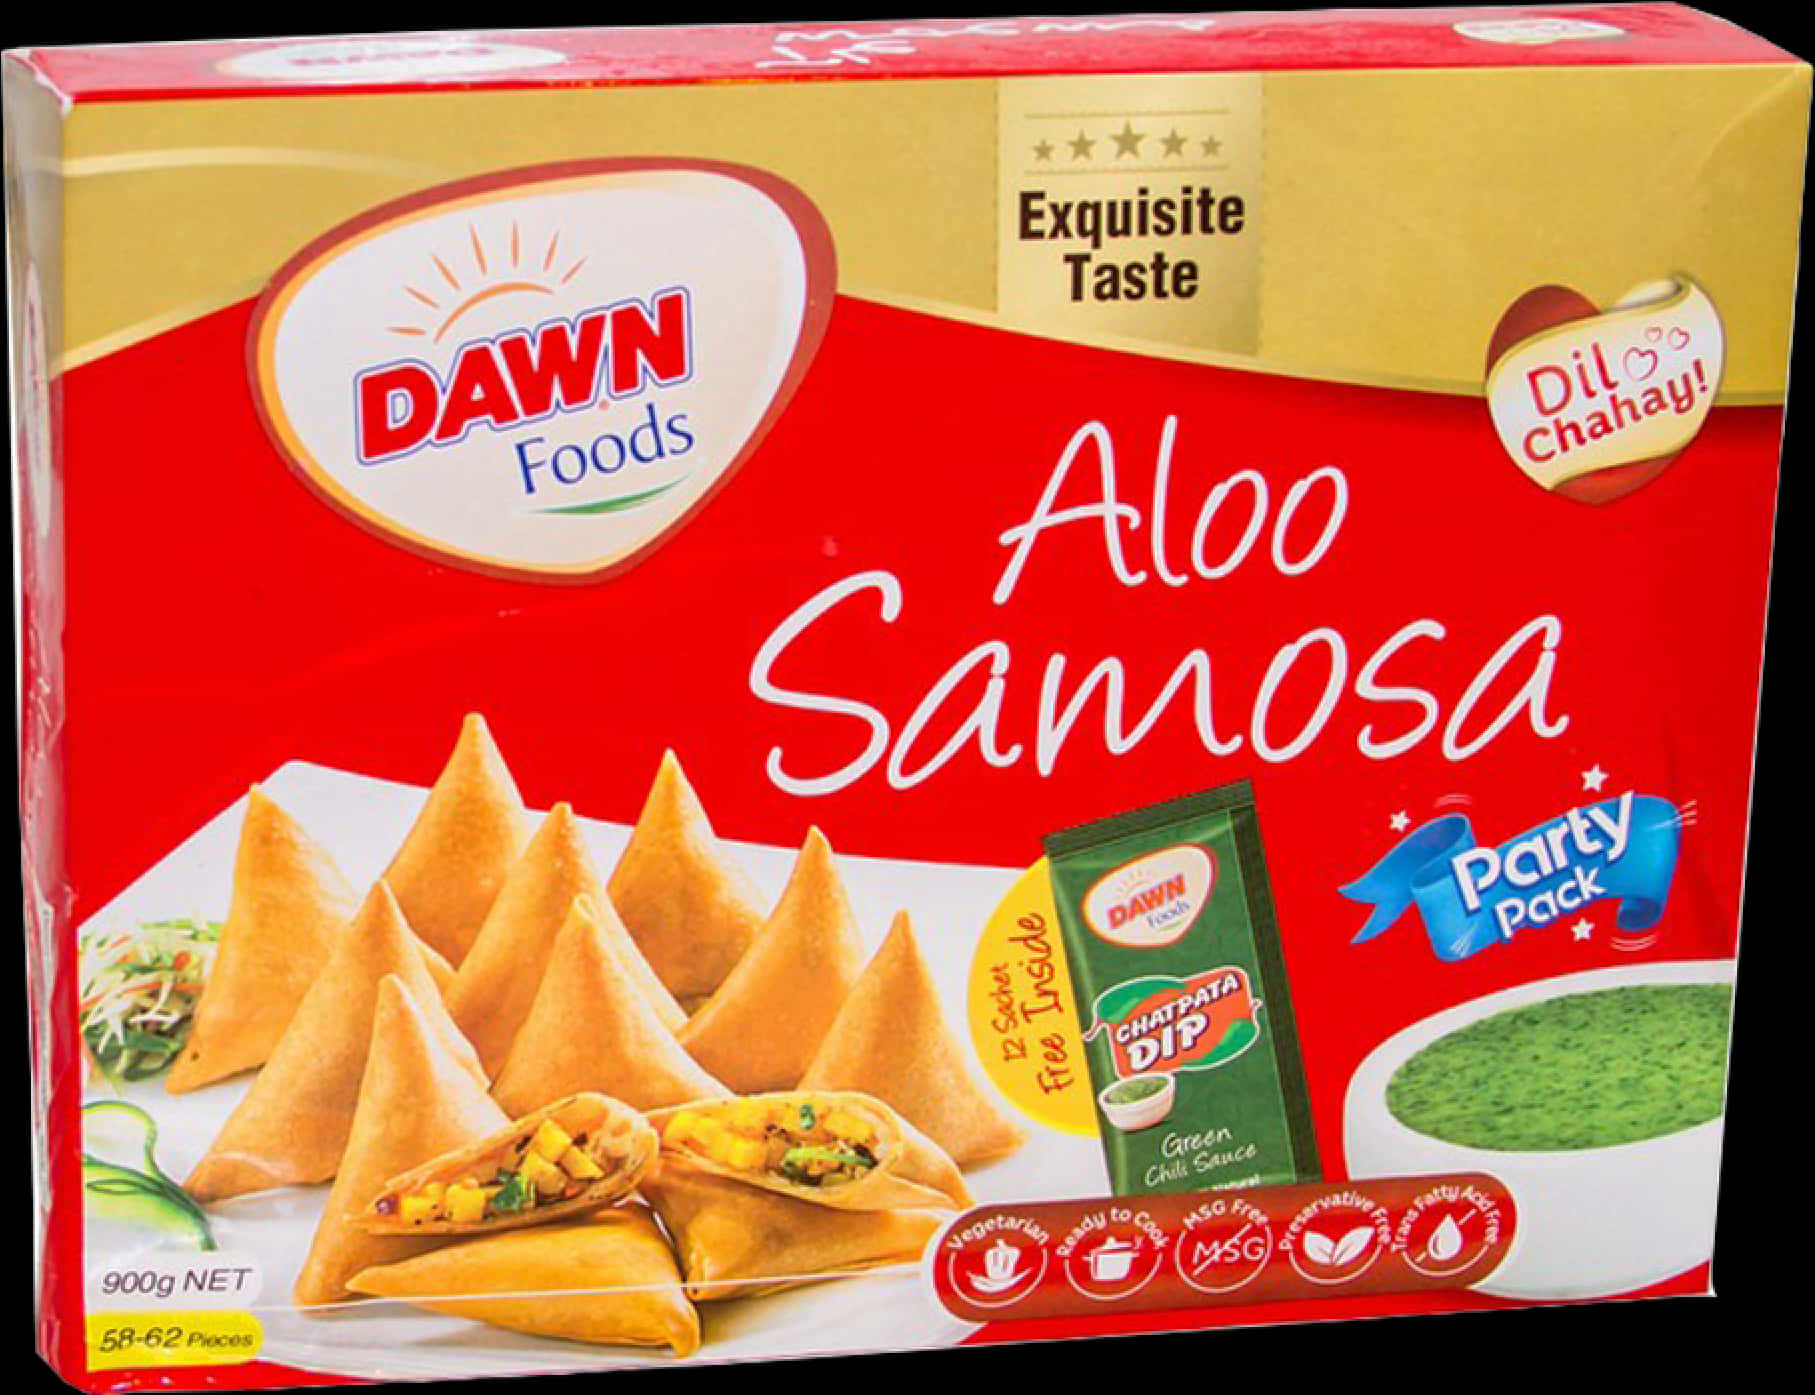 Dawn Foods Aloo Samosa Packaging